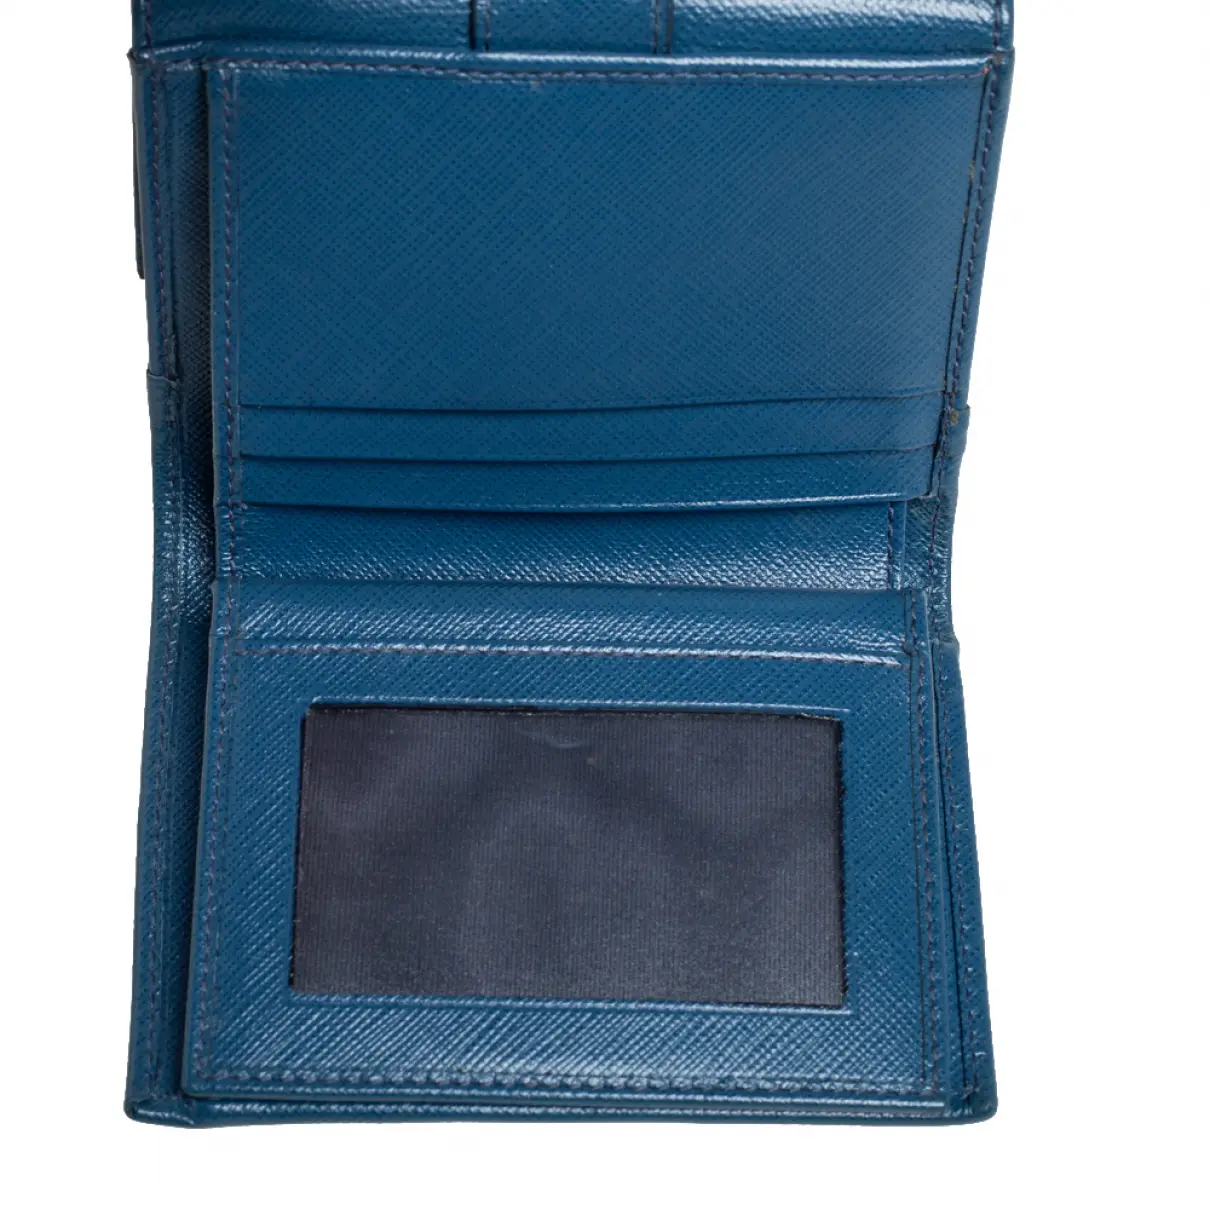 Buy Salvatore Ferragamo Vara leather handbag online